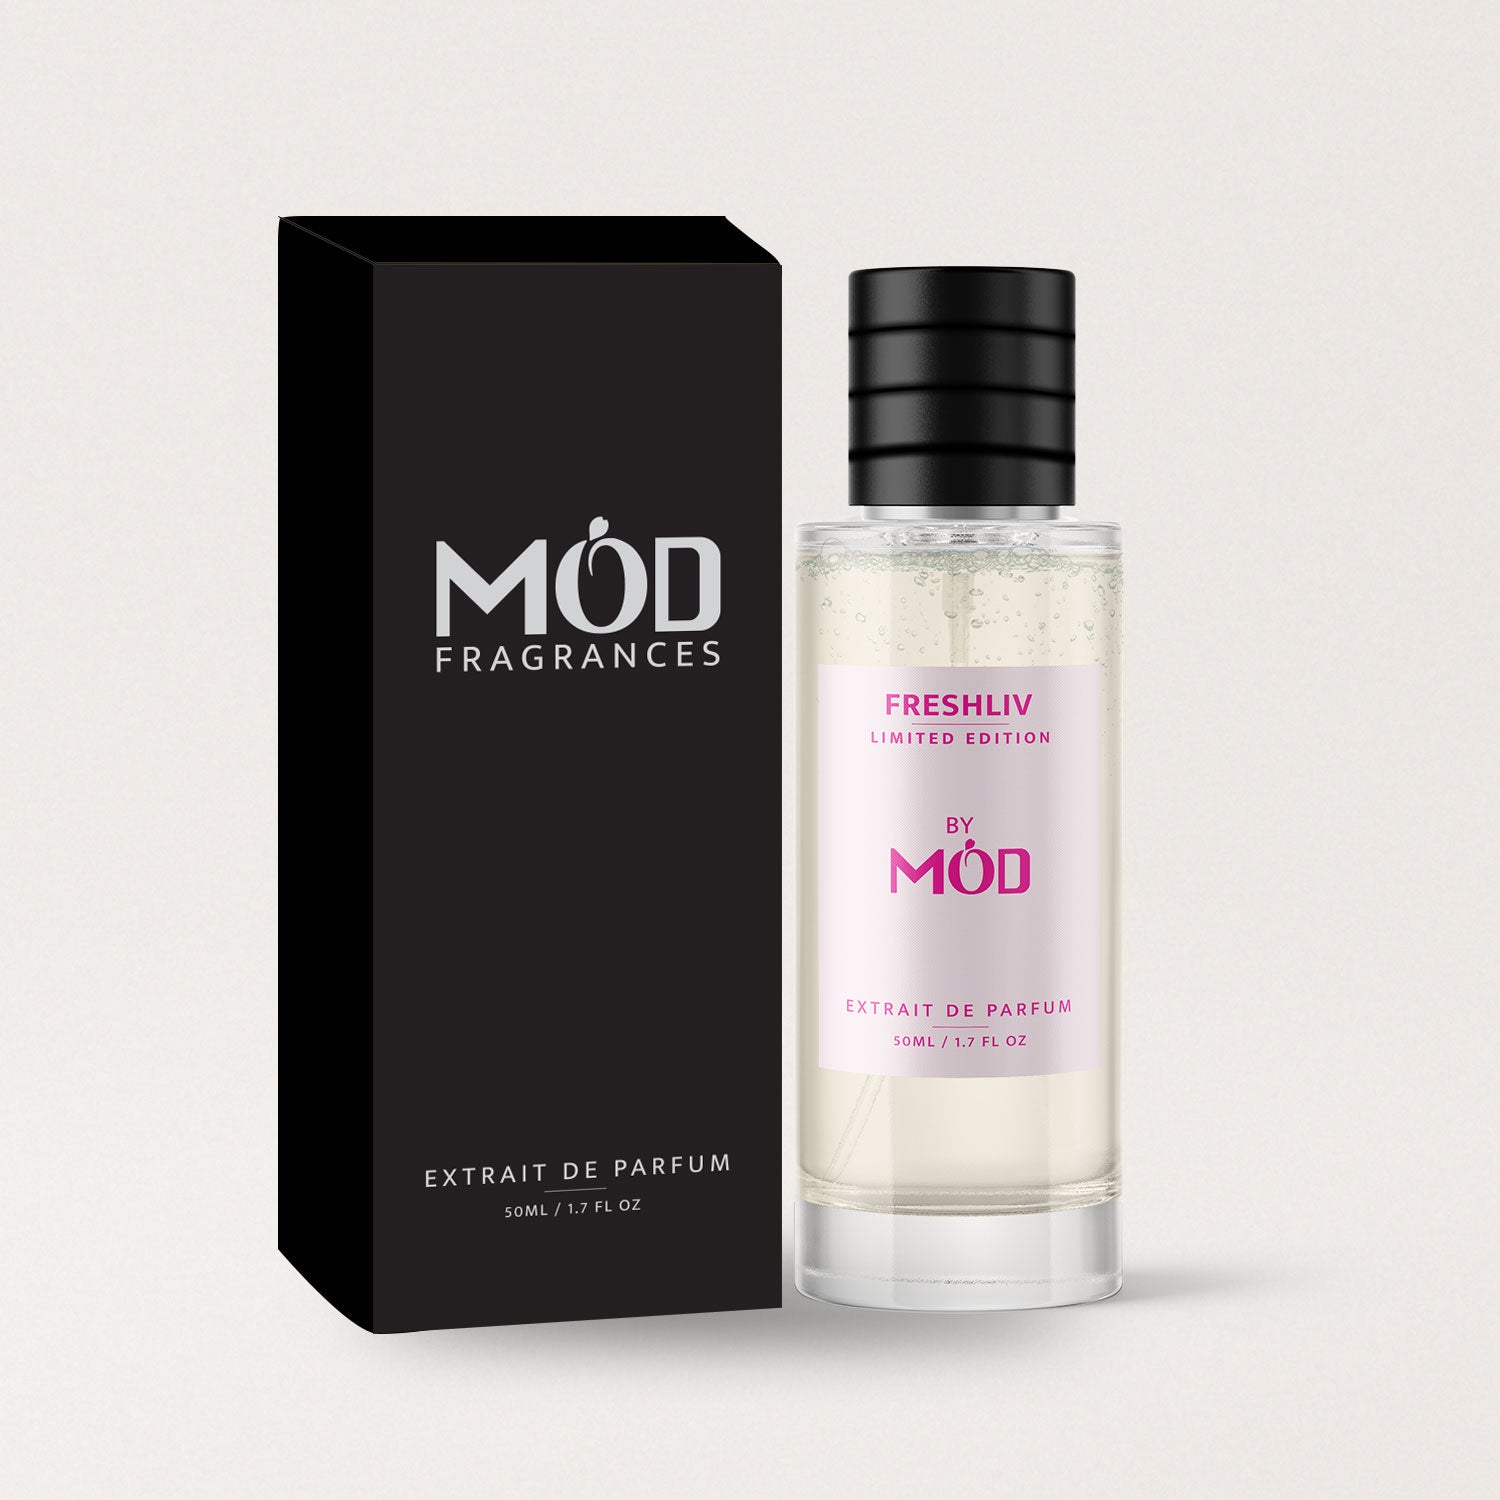 Freshliv - Limited Edition - Mod Fragrances